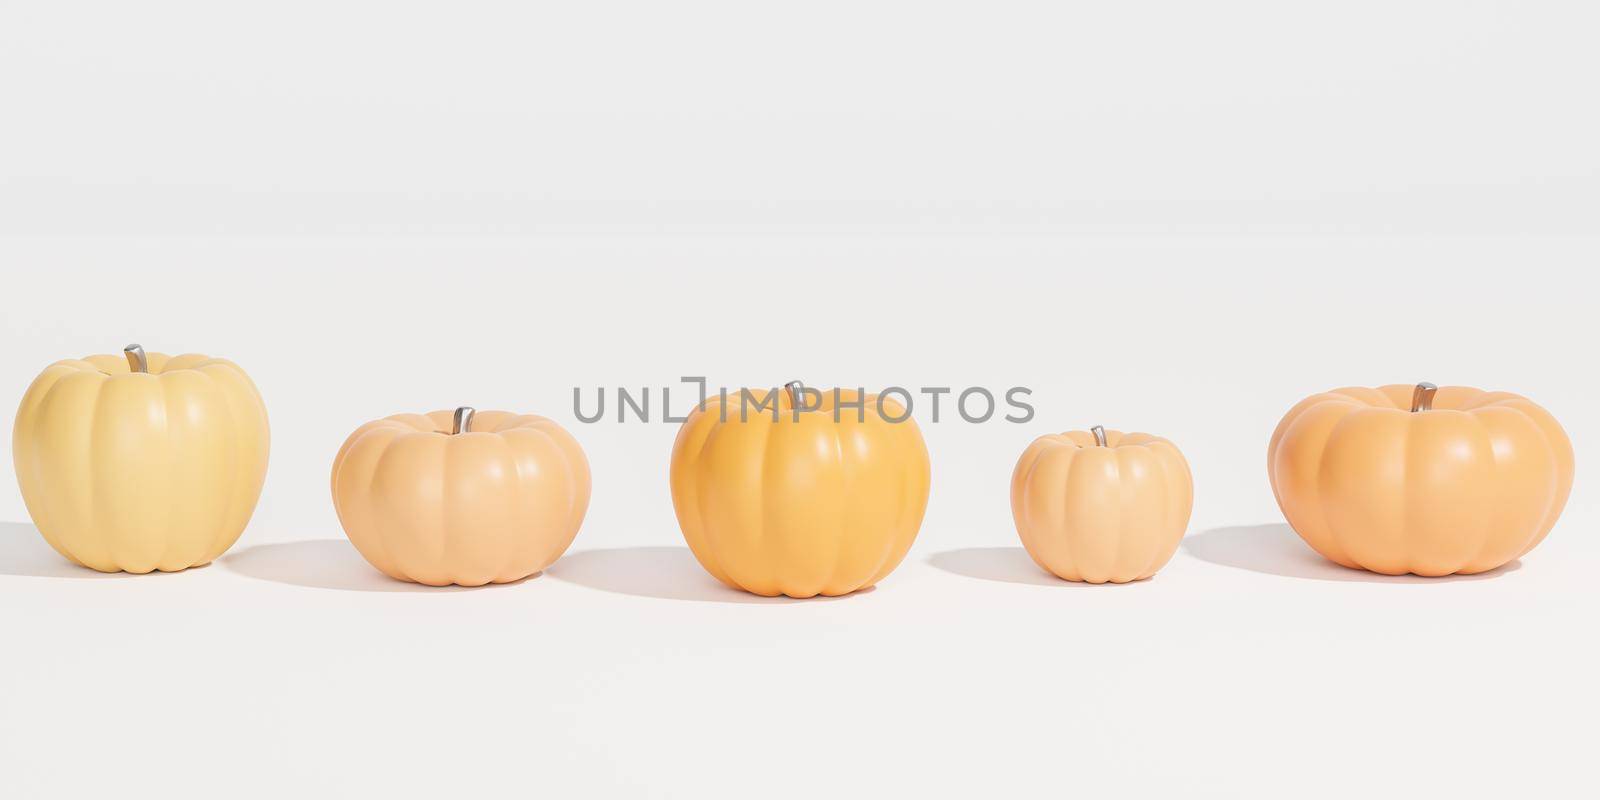 Pumpkins set on white background for advertising on autumn holidays or sales, 3d banner render